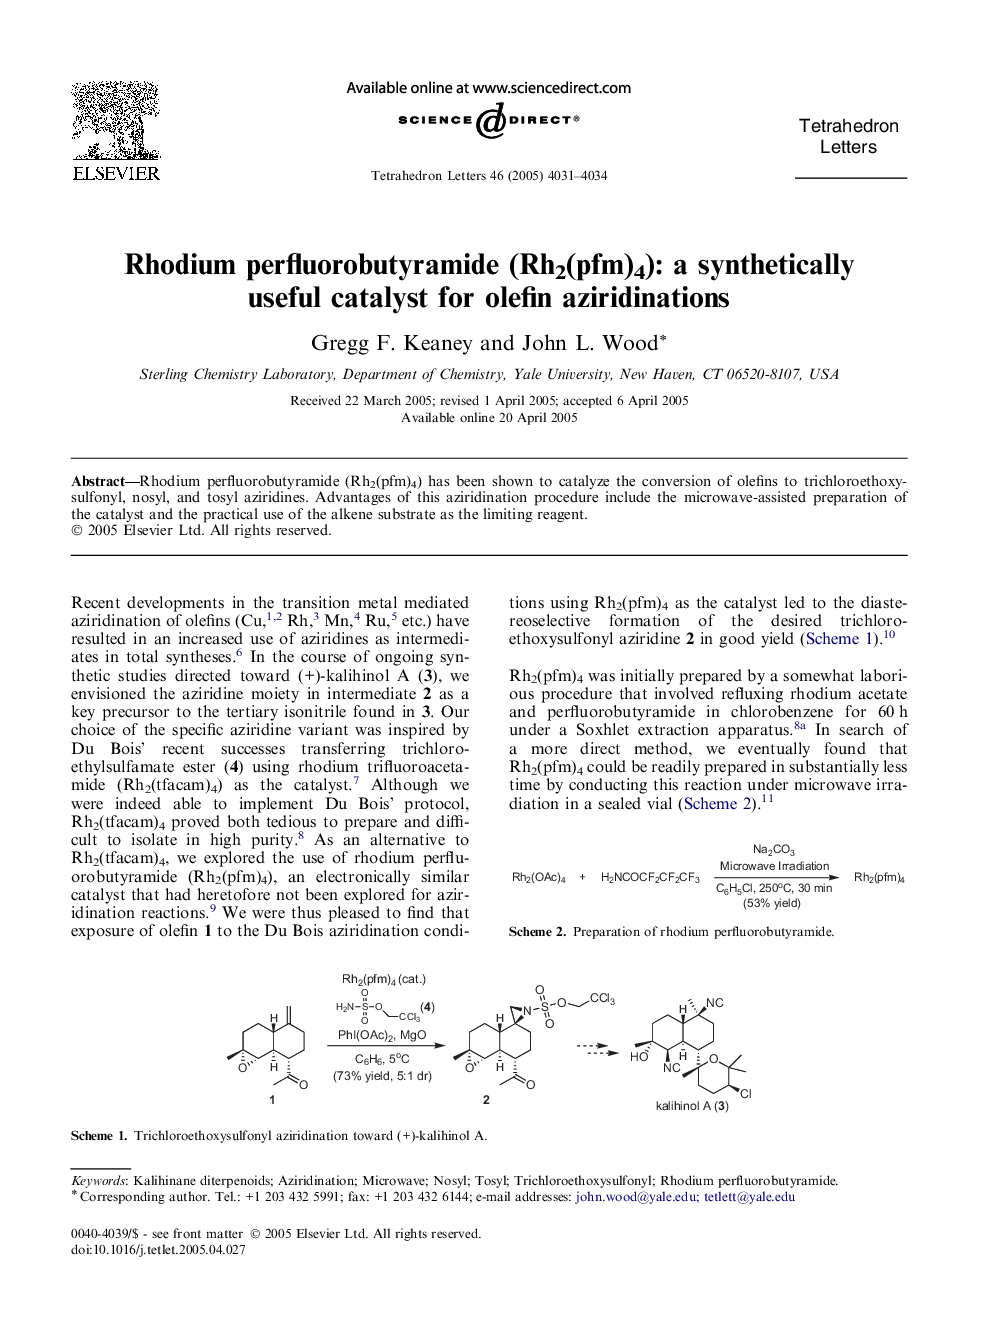 Rhodium perfluorobutyramide (Rh2(pfm)4): a synthetically useful catalyst for olefin aziridinations